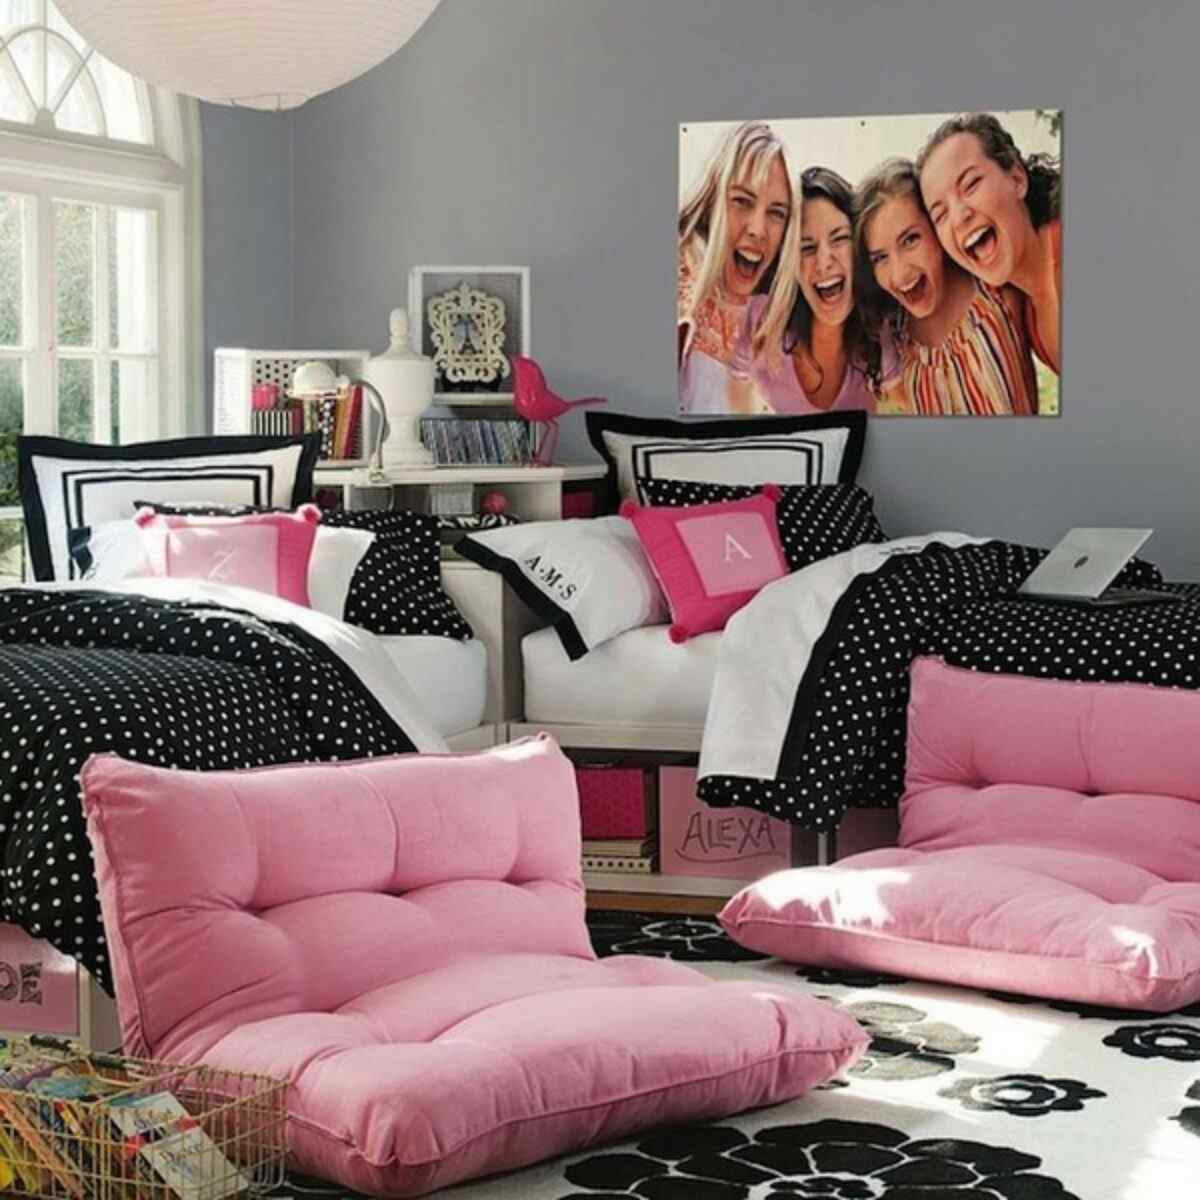 Glamorous and stylish bedroom ideas for teenage girls